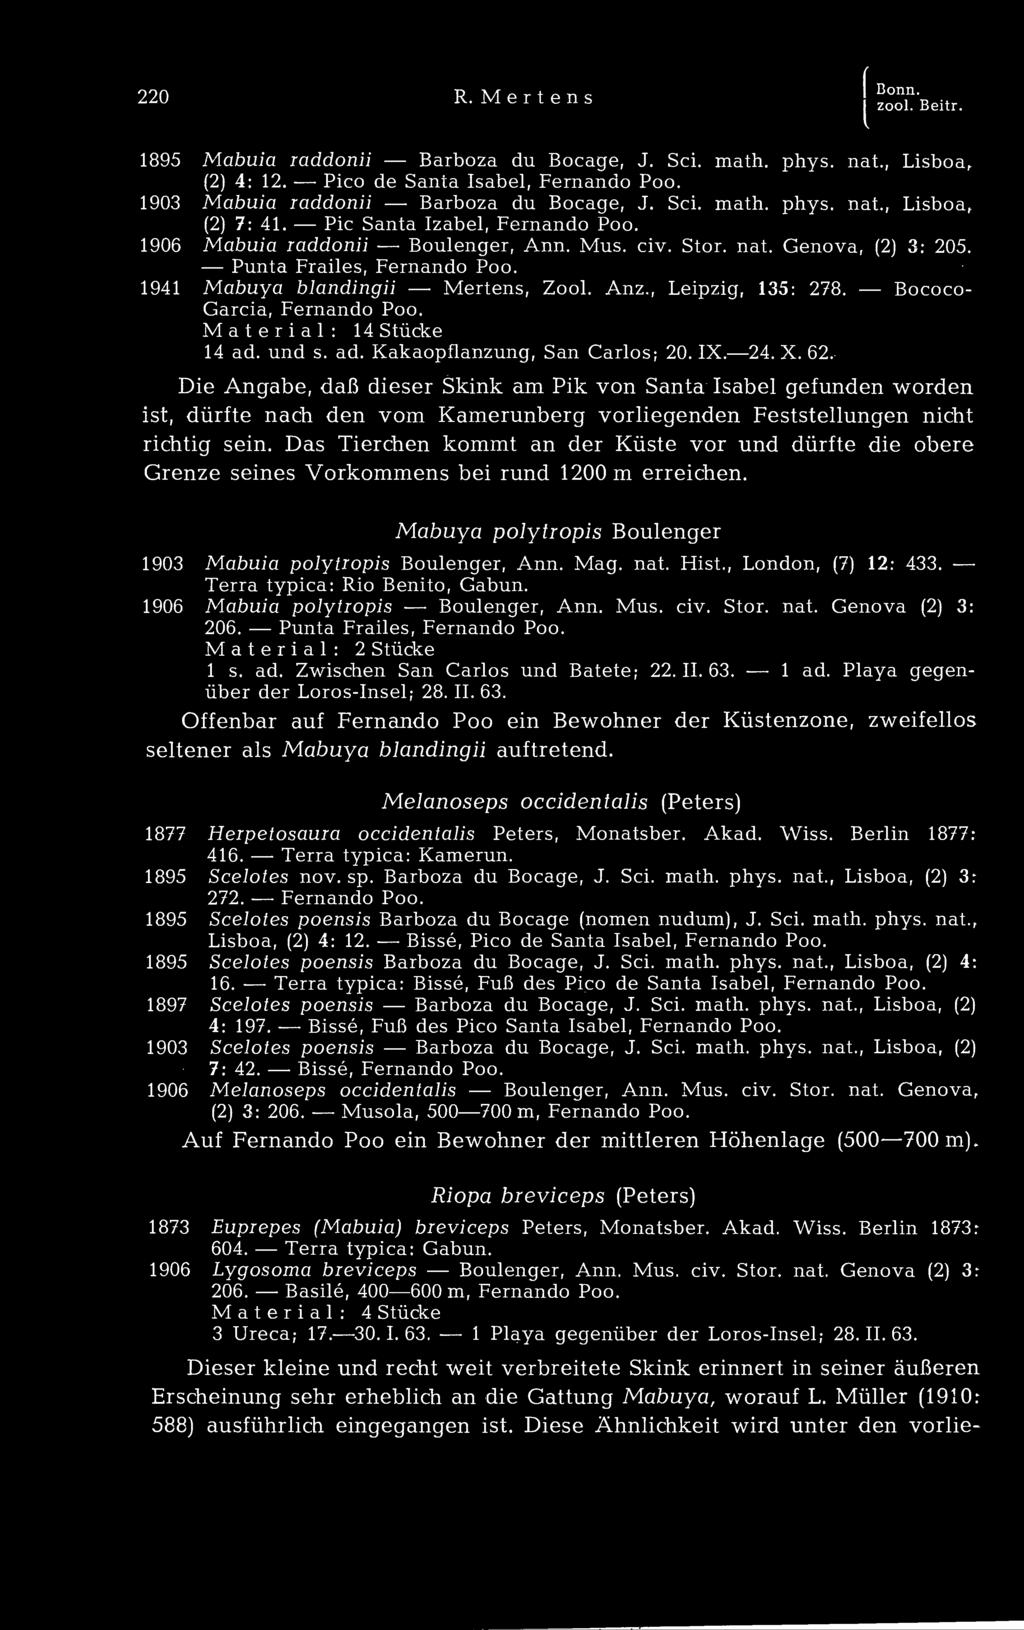 Bococo- Garcia, Fernando Material: 14 Stücke 14 ad. und s. ad. Kakaopflanzung, San Carlos; 20. IX. 24. X. 62.